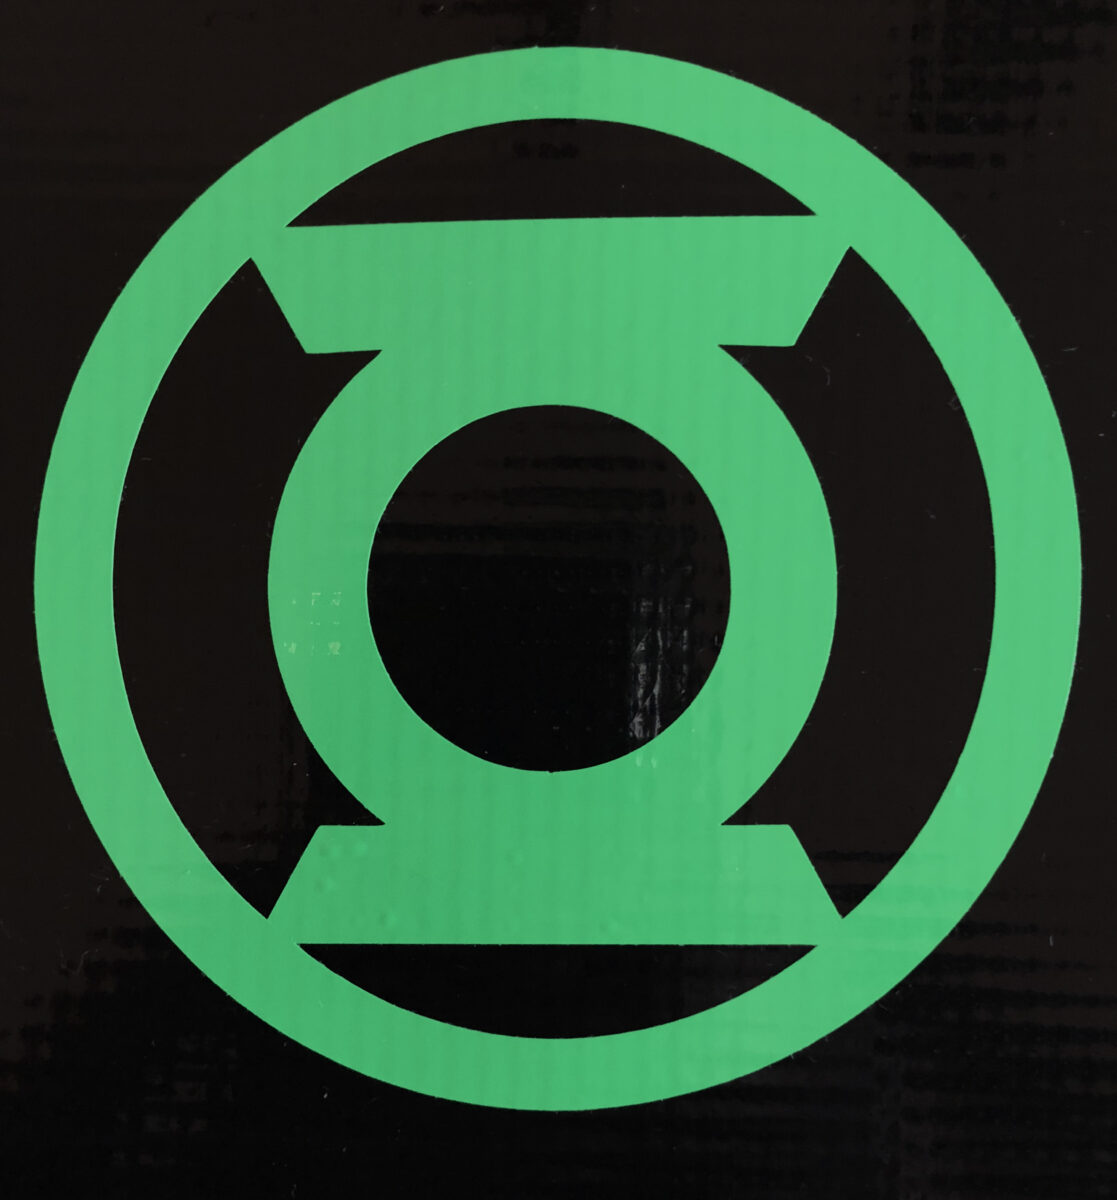 violet lantern corps logo